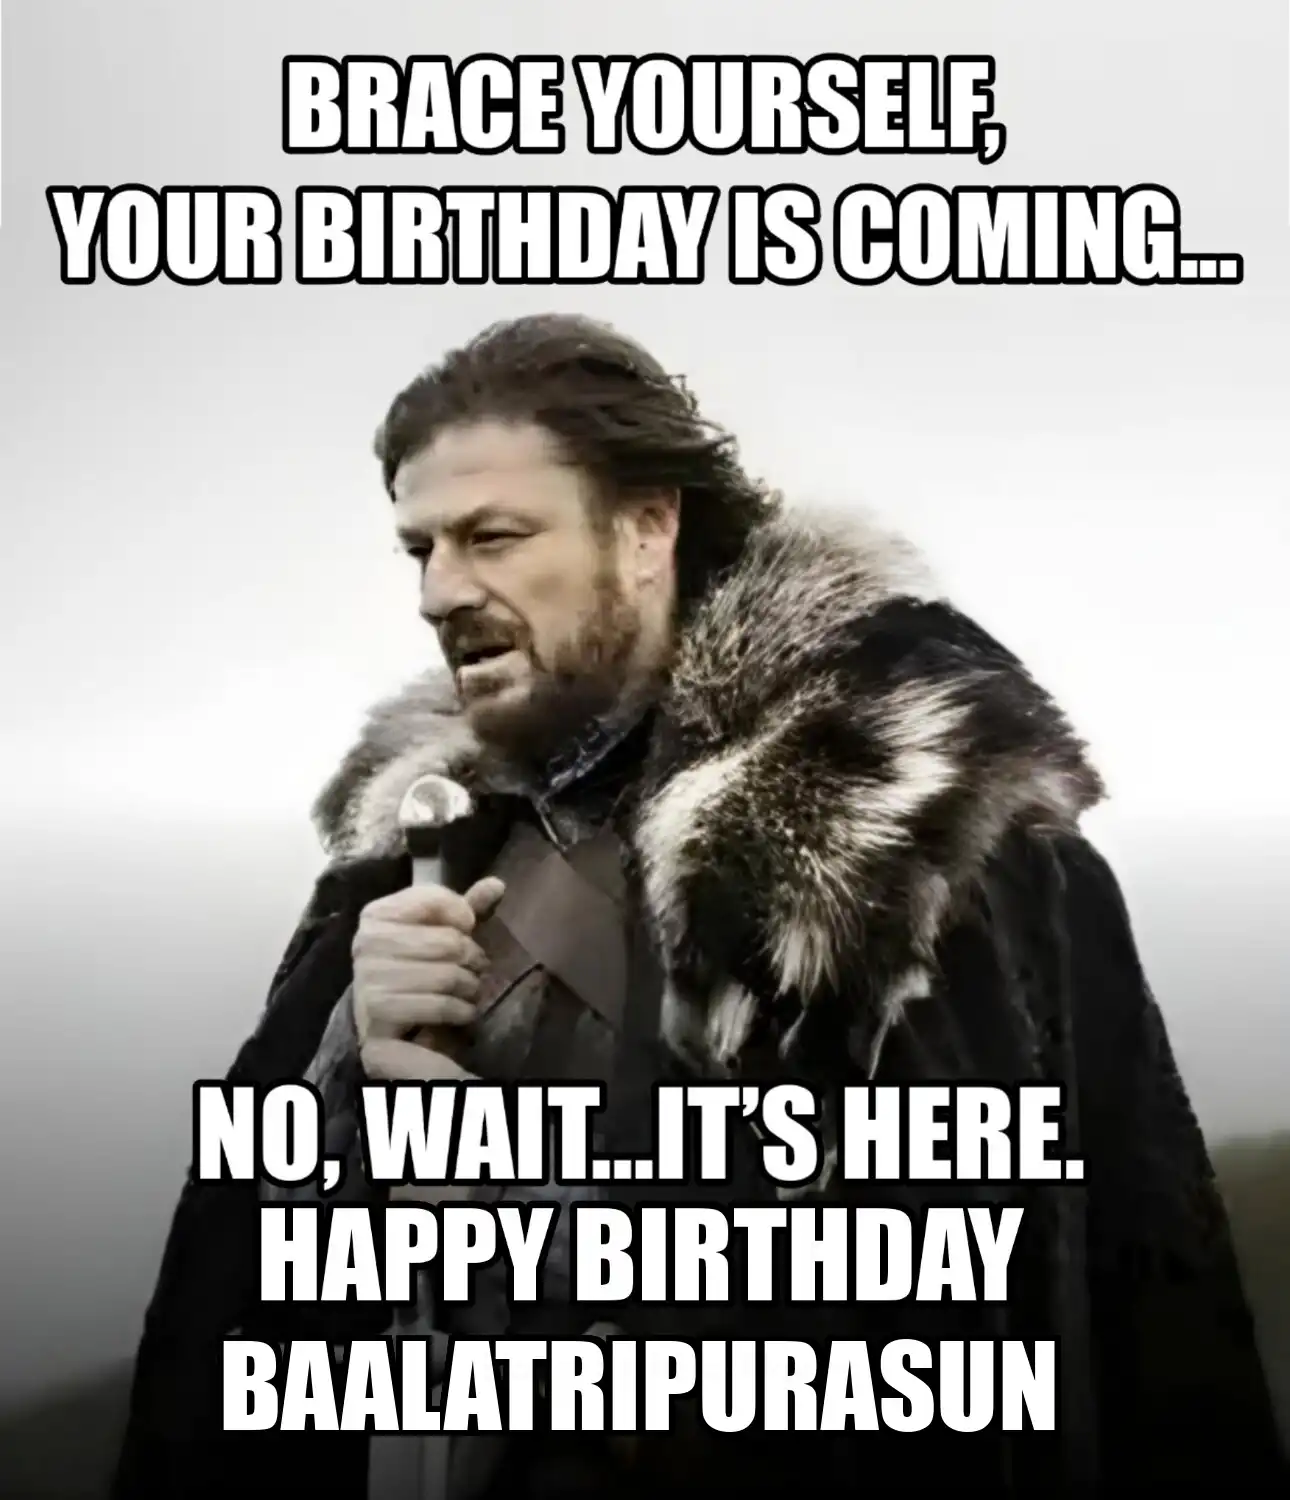 Happy Birthday Baalatripurasun Brace Yourself Your Birthday Is Coming Meme